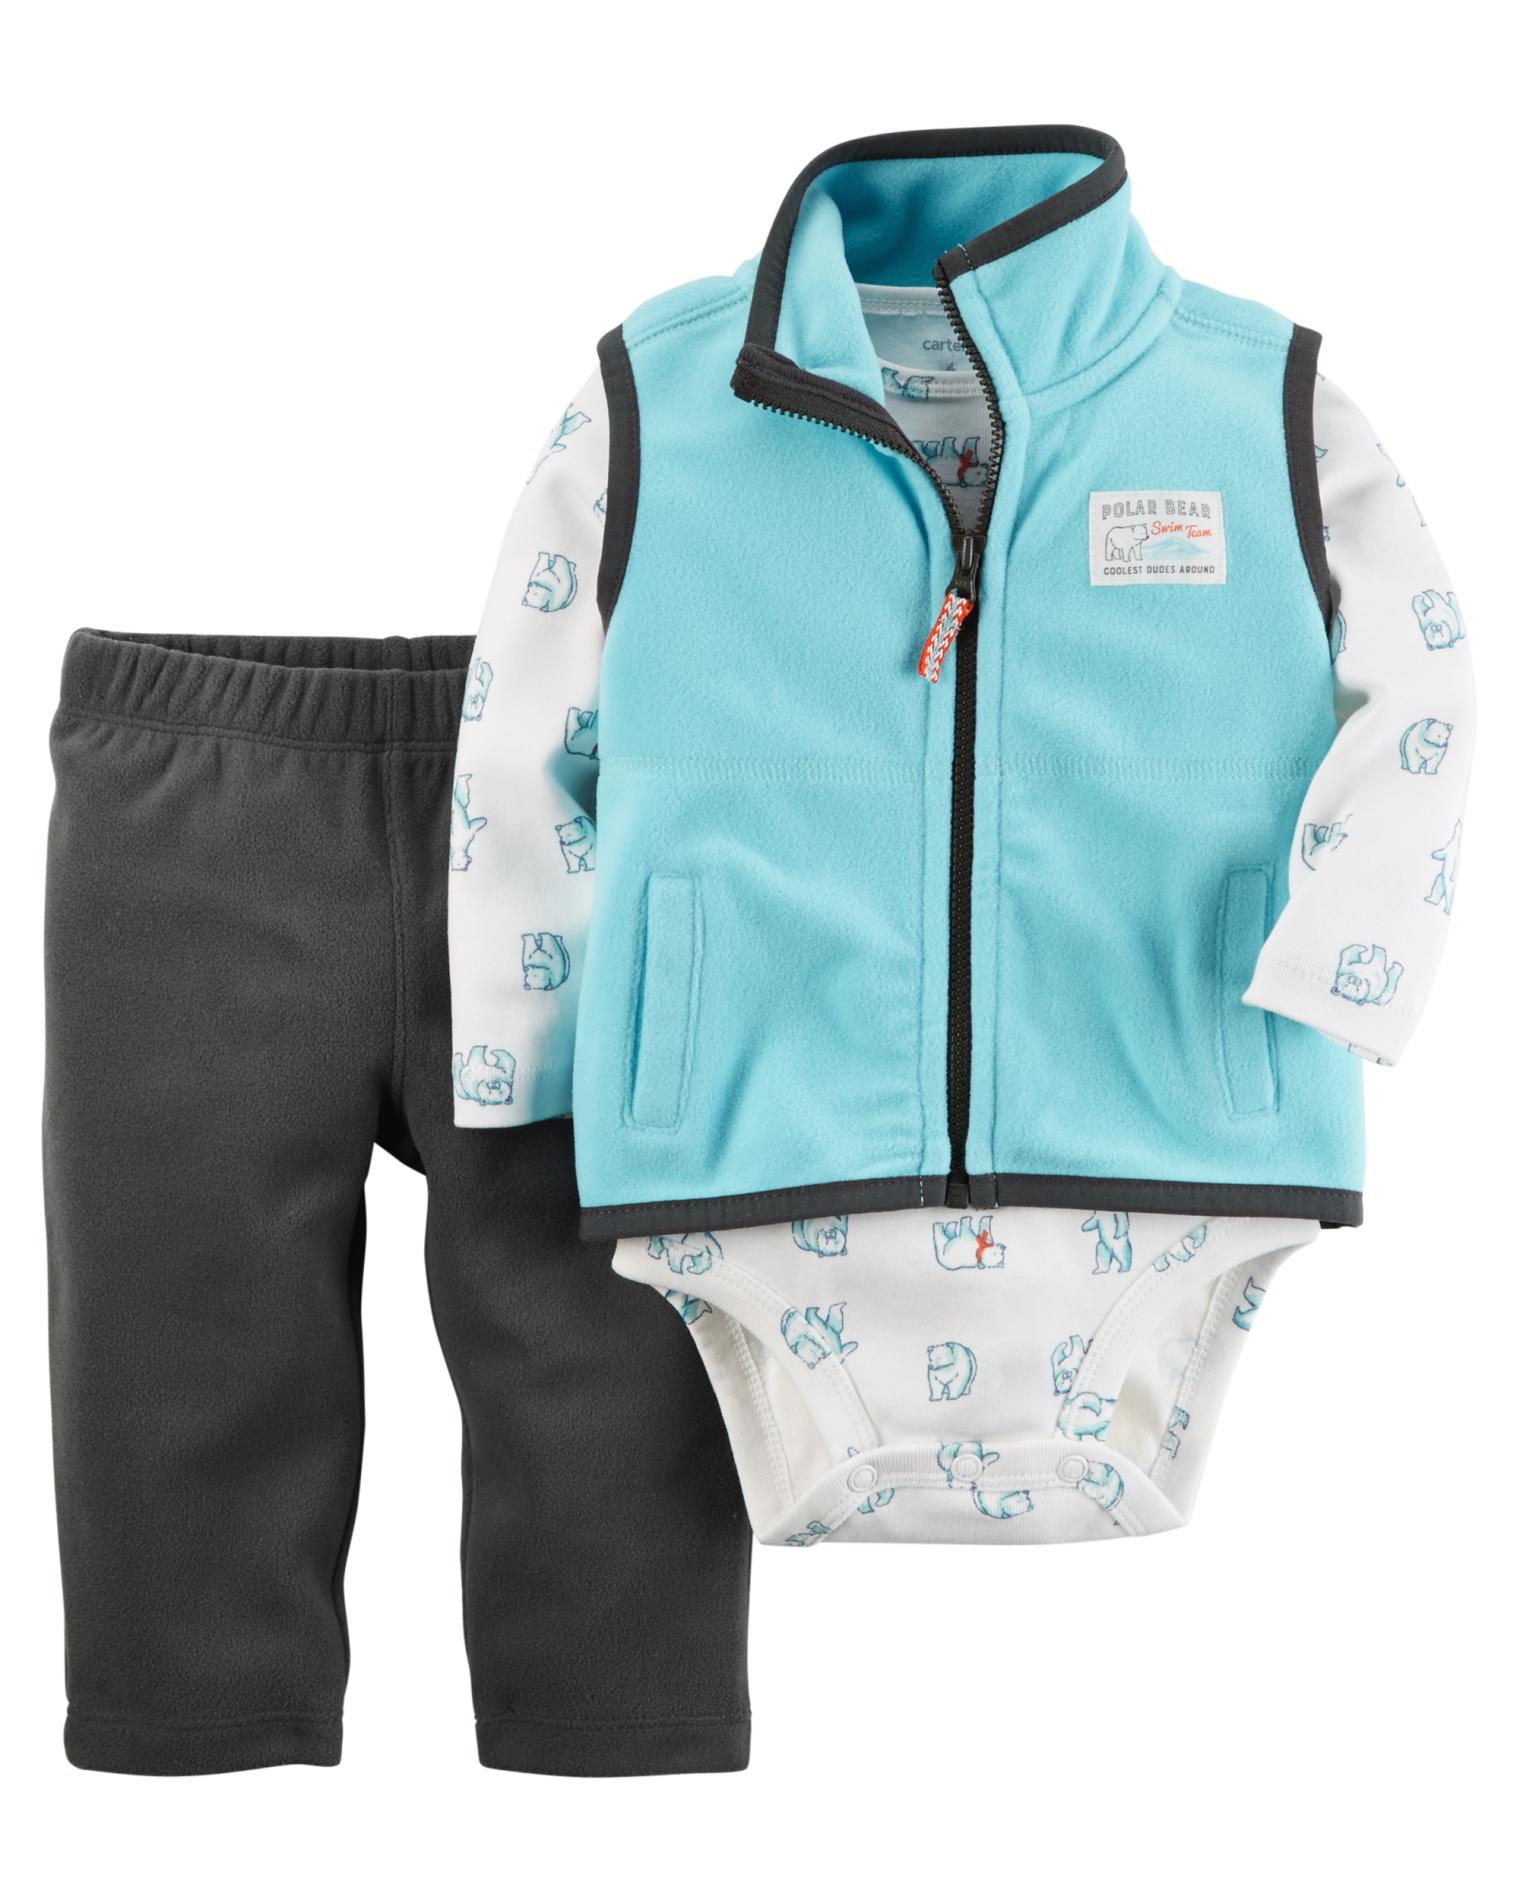 Carter's Newborn & Infant Boys' Vest, Bodysuit & Jeans - Polar Bears